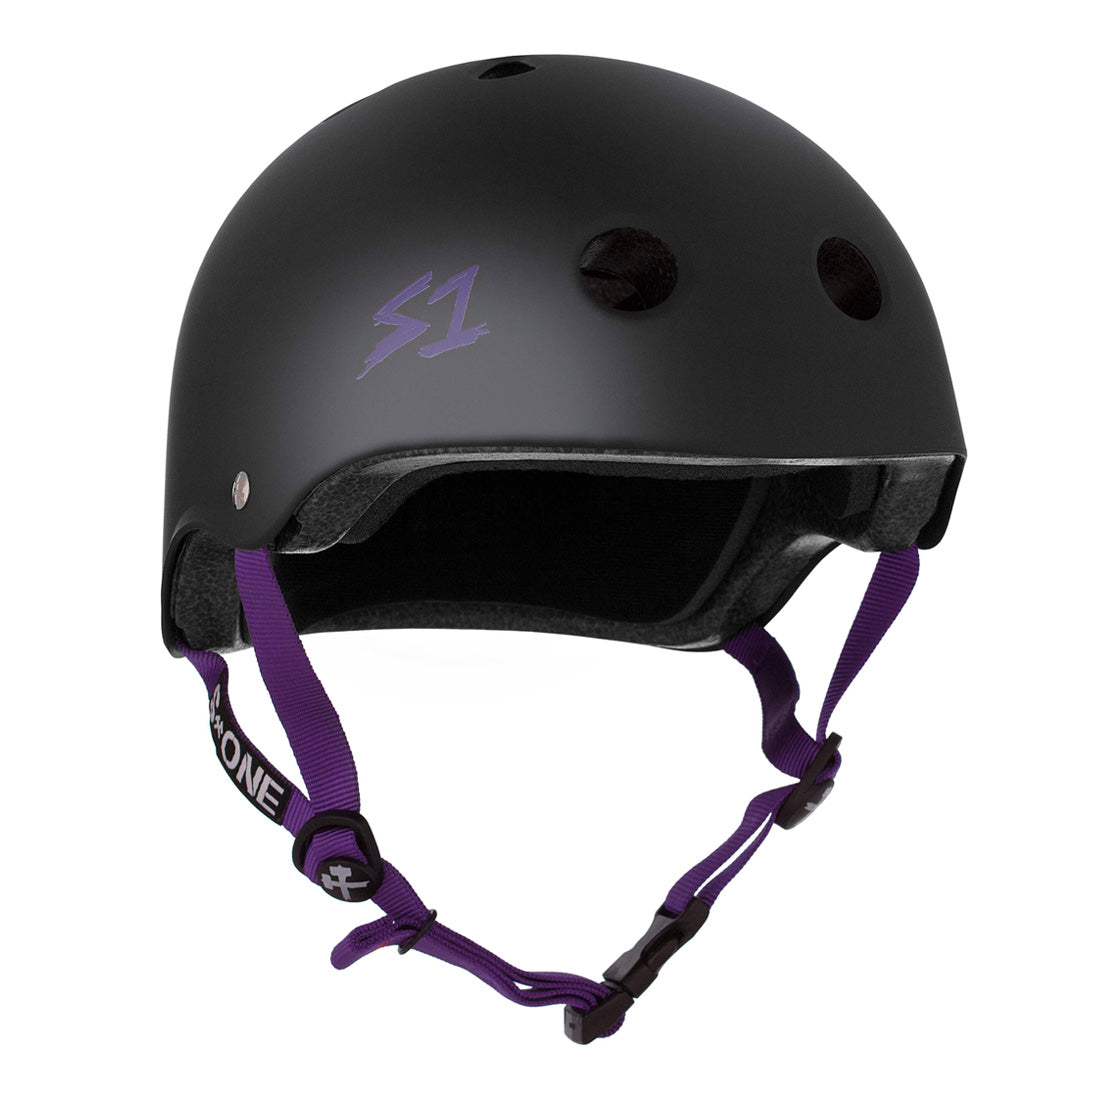 S-One Lifer Helmet - Black/Purple Matte Helmets